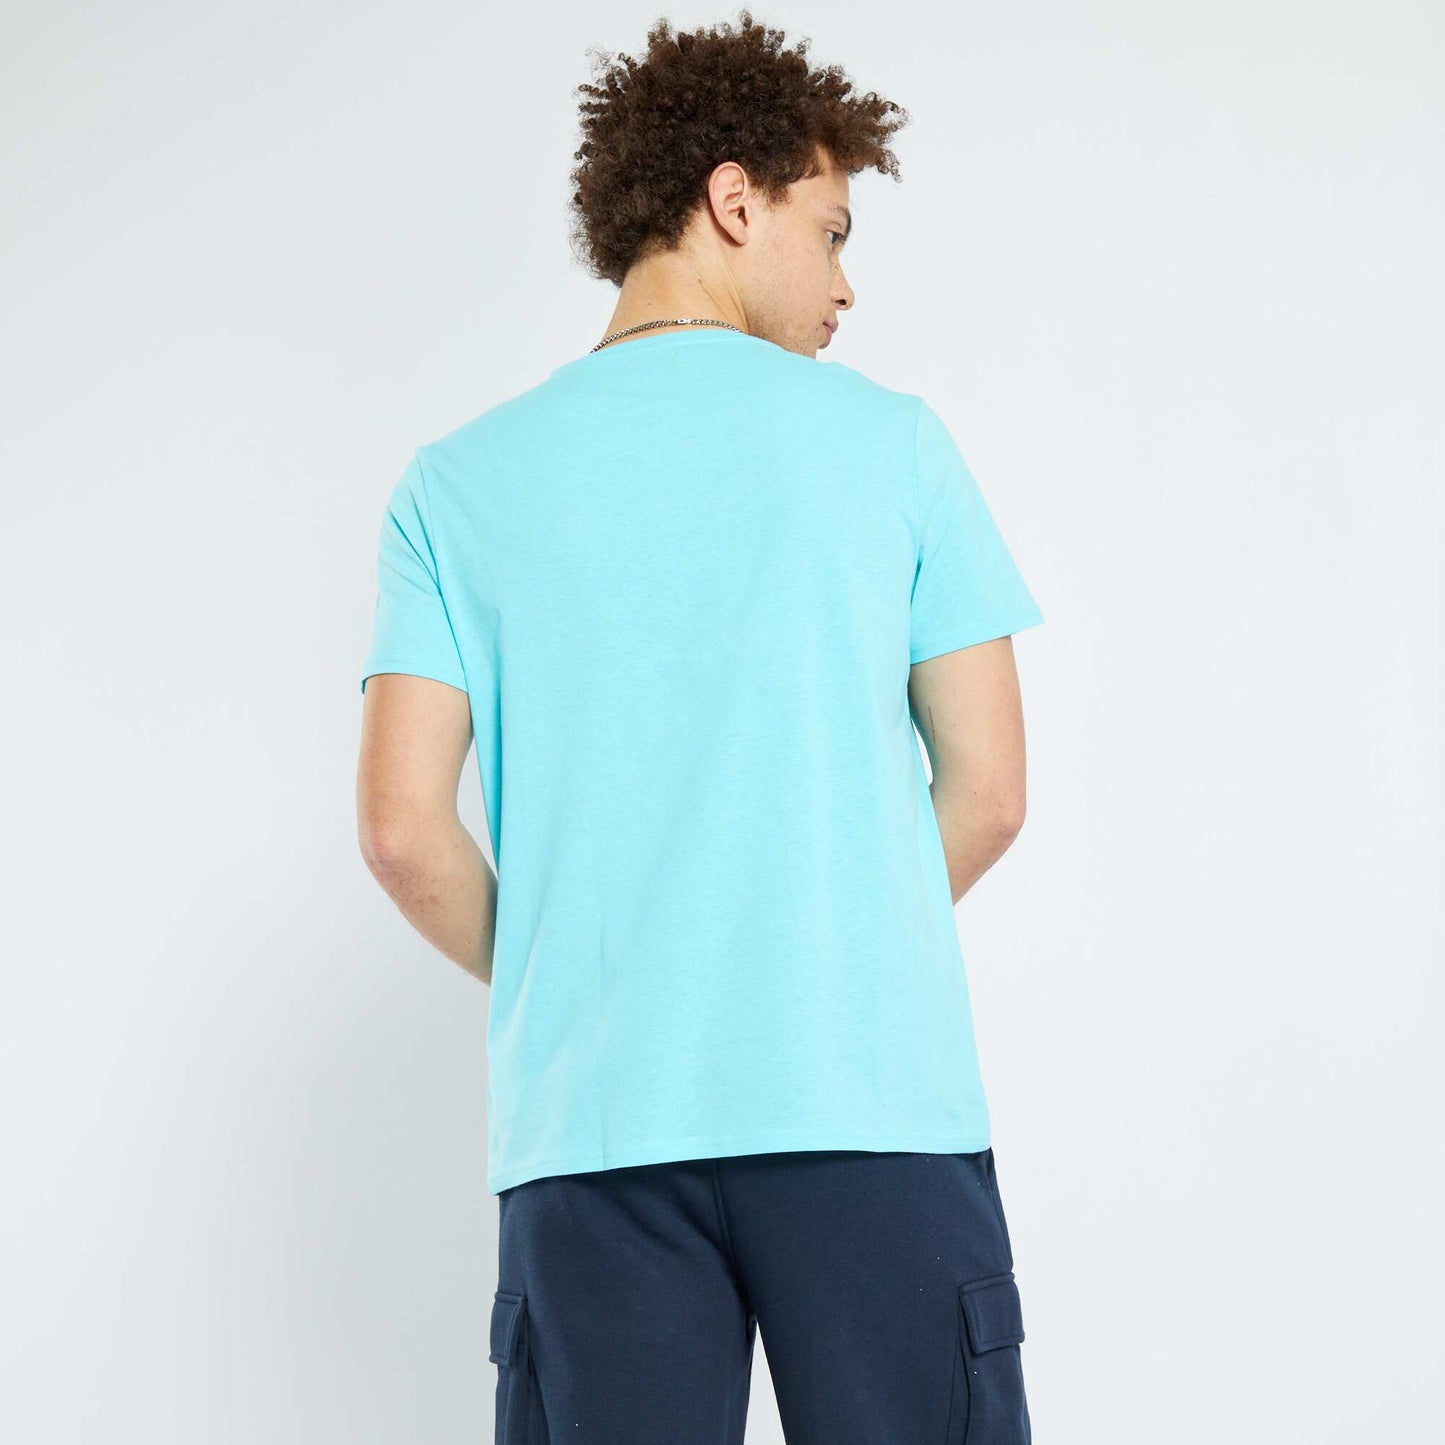 T-shirt en jersey uni bleu turquoise